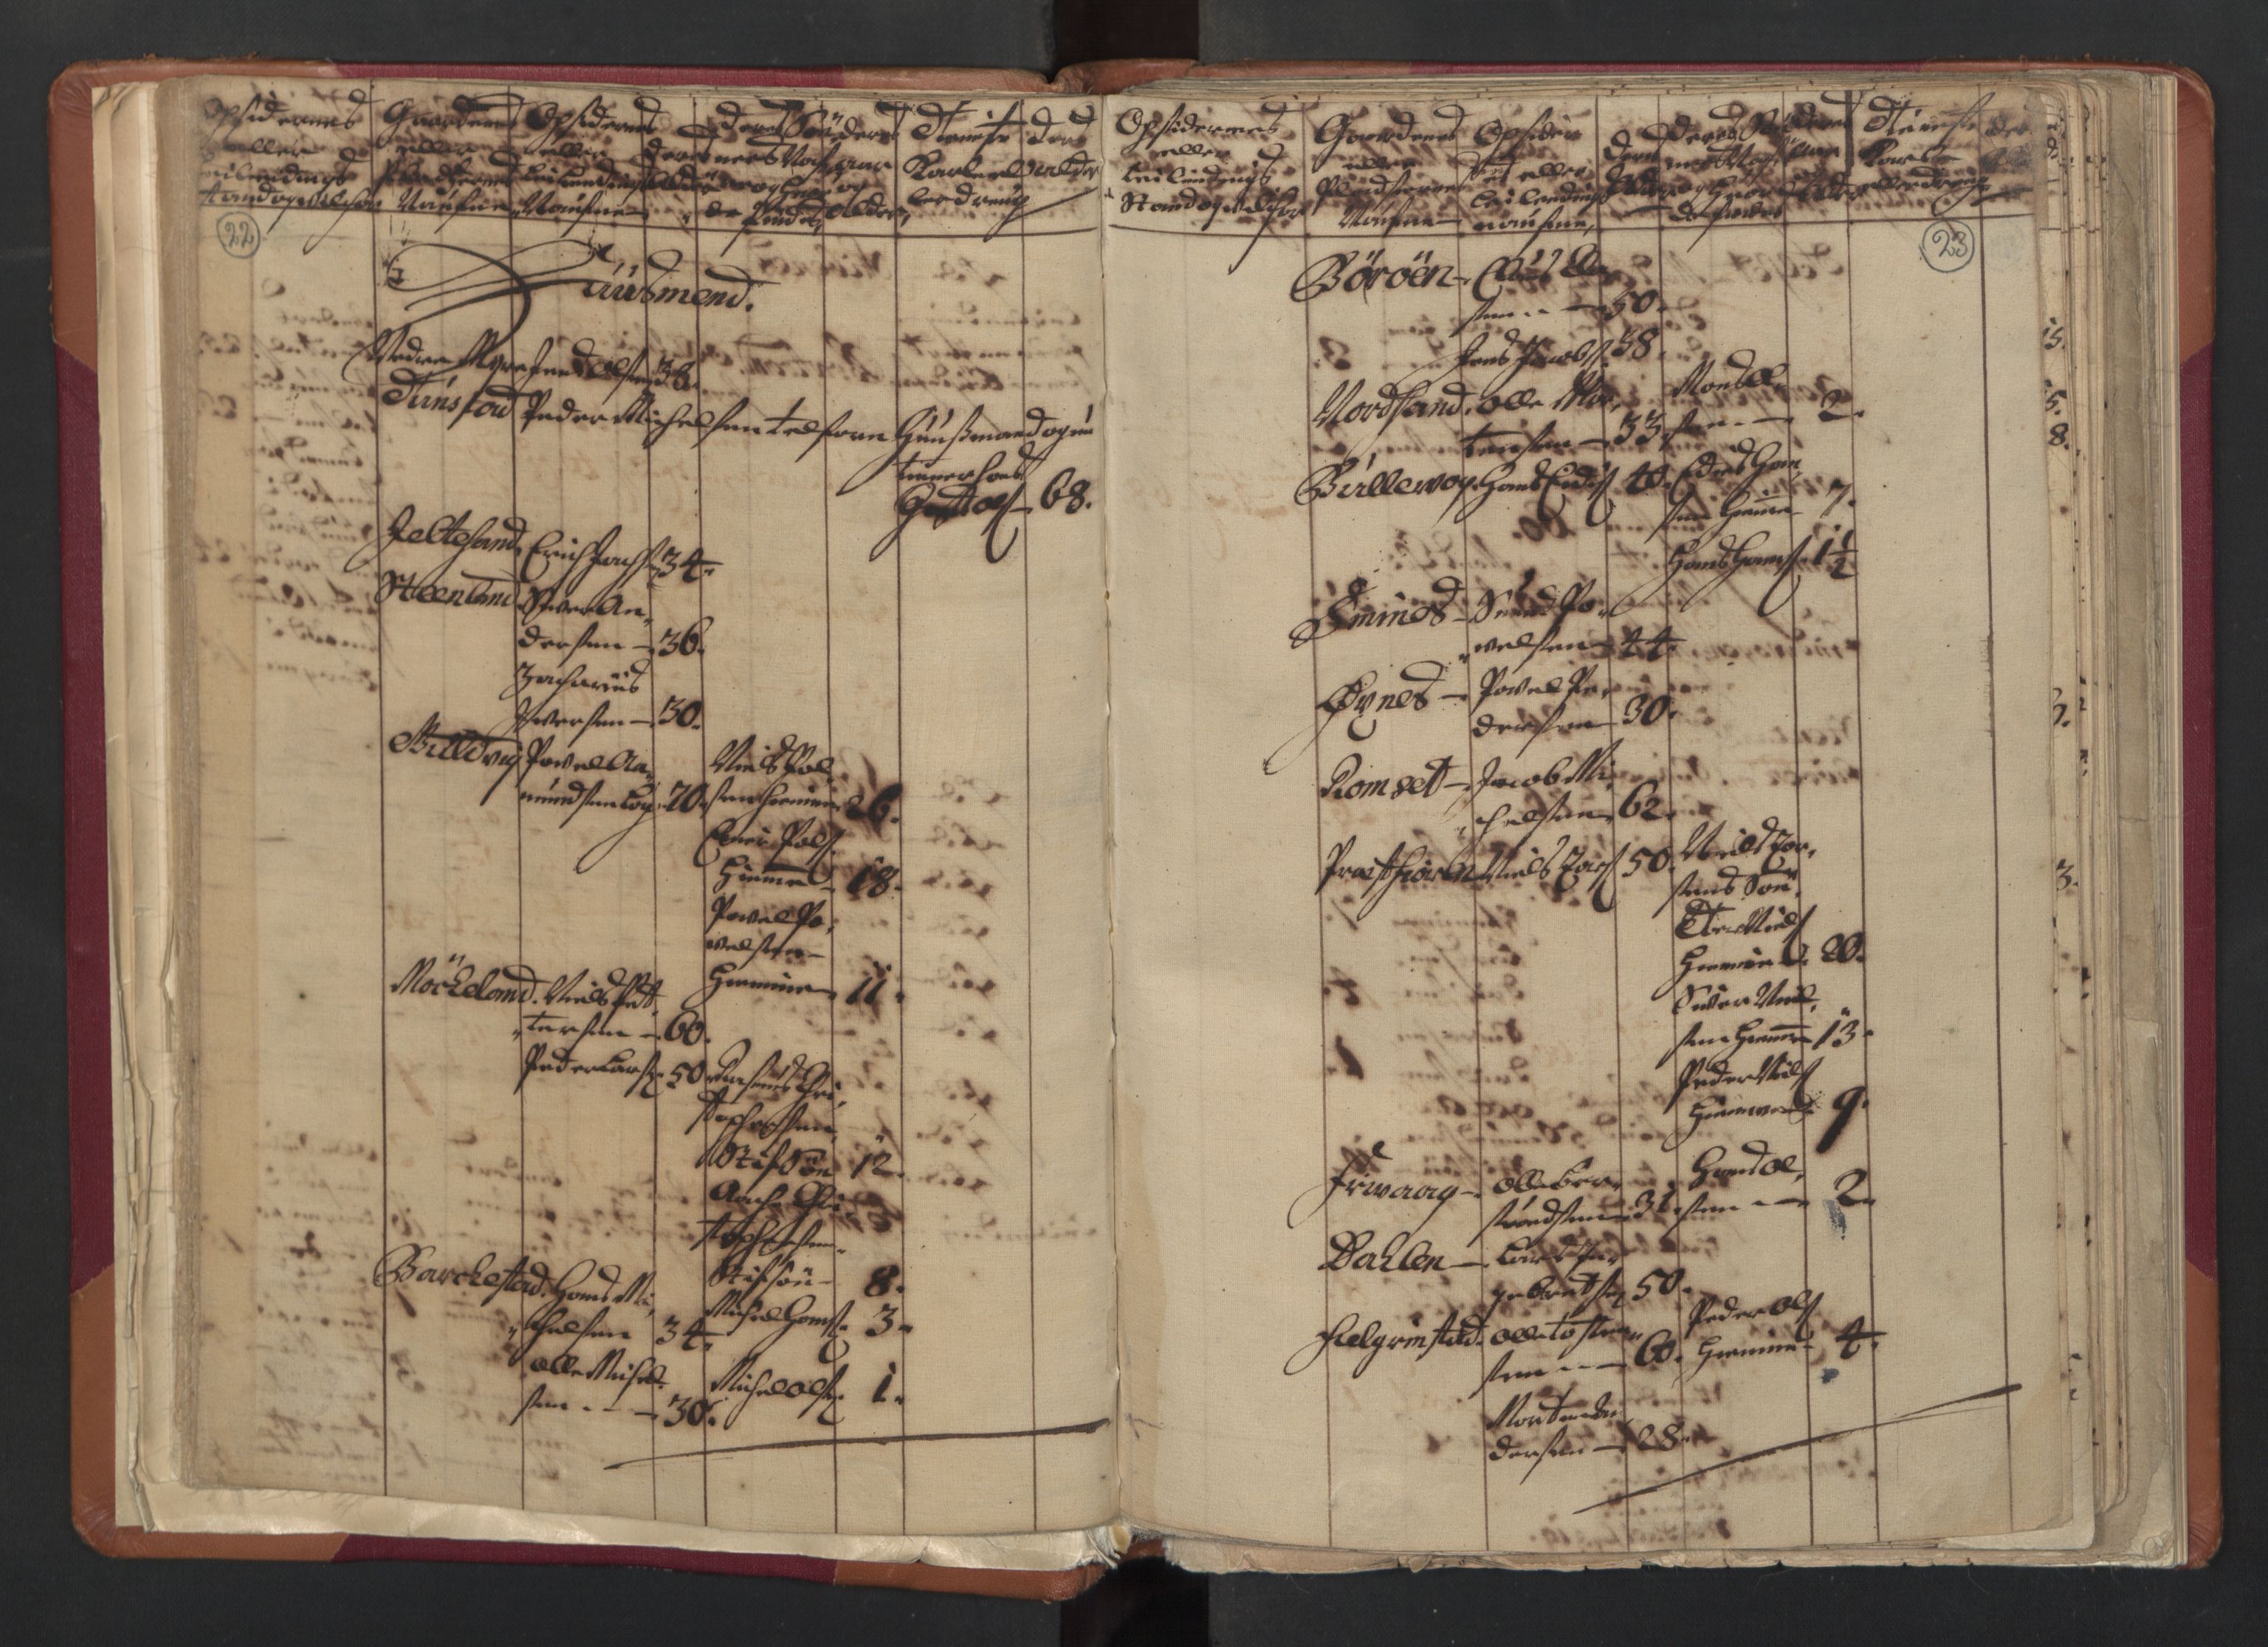 RA, Manntallet 1701, nr. 18: Vesterålen, Andenes og Lofoten fogderi, 1701, s. 22-23